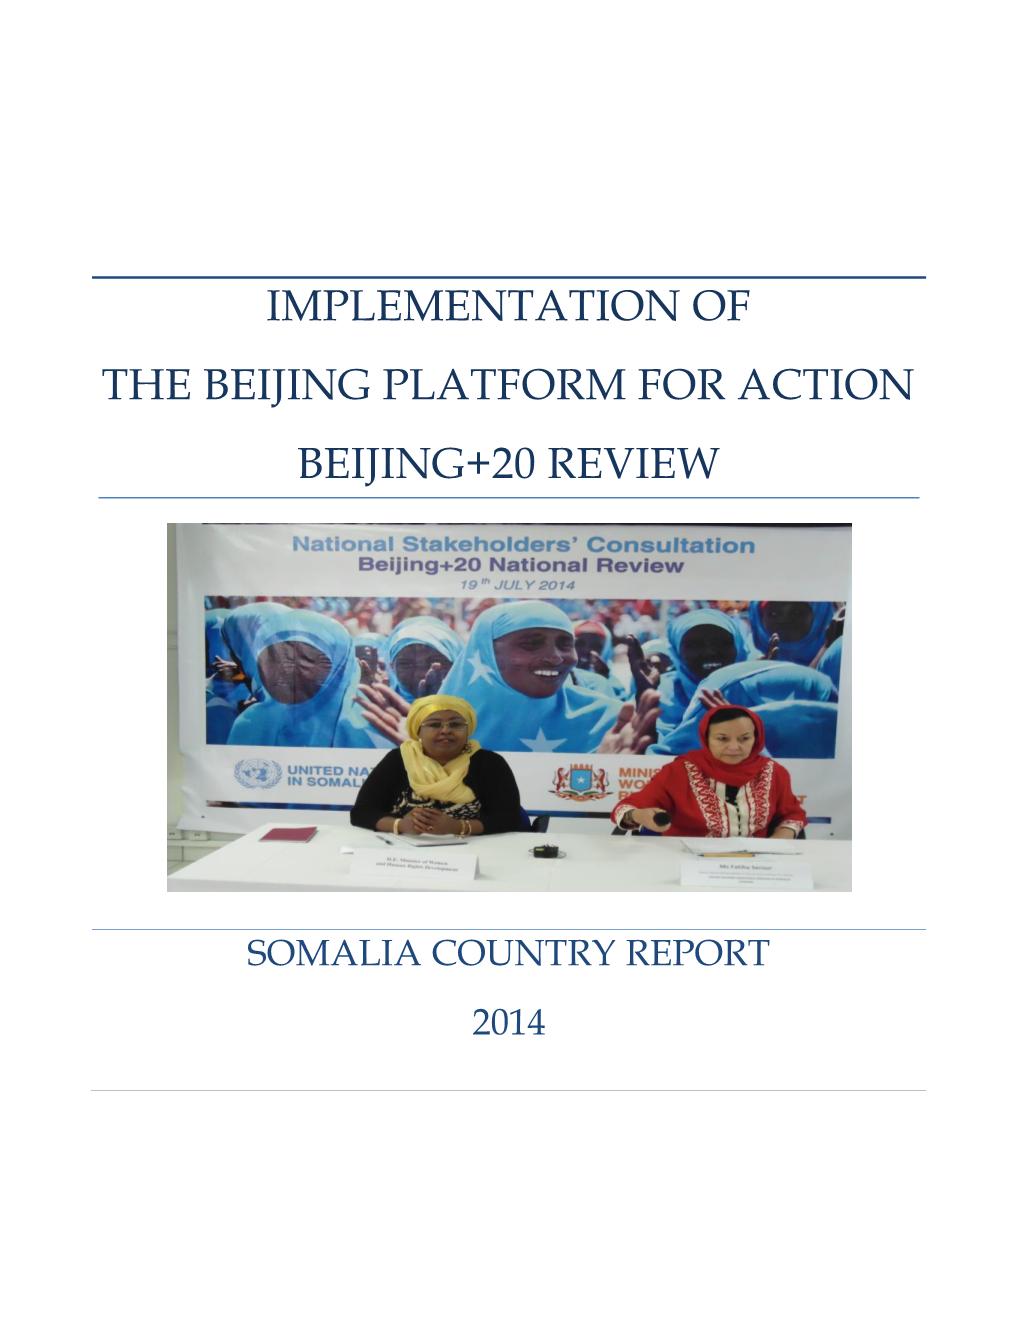 Somalia Review Report for Beijing